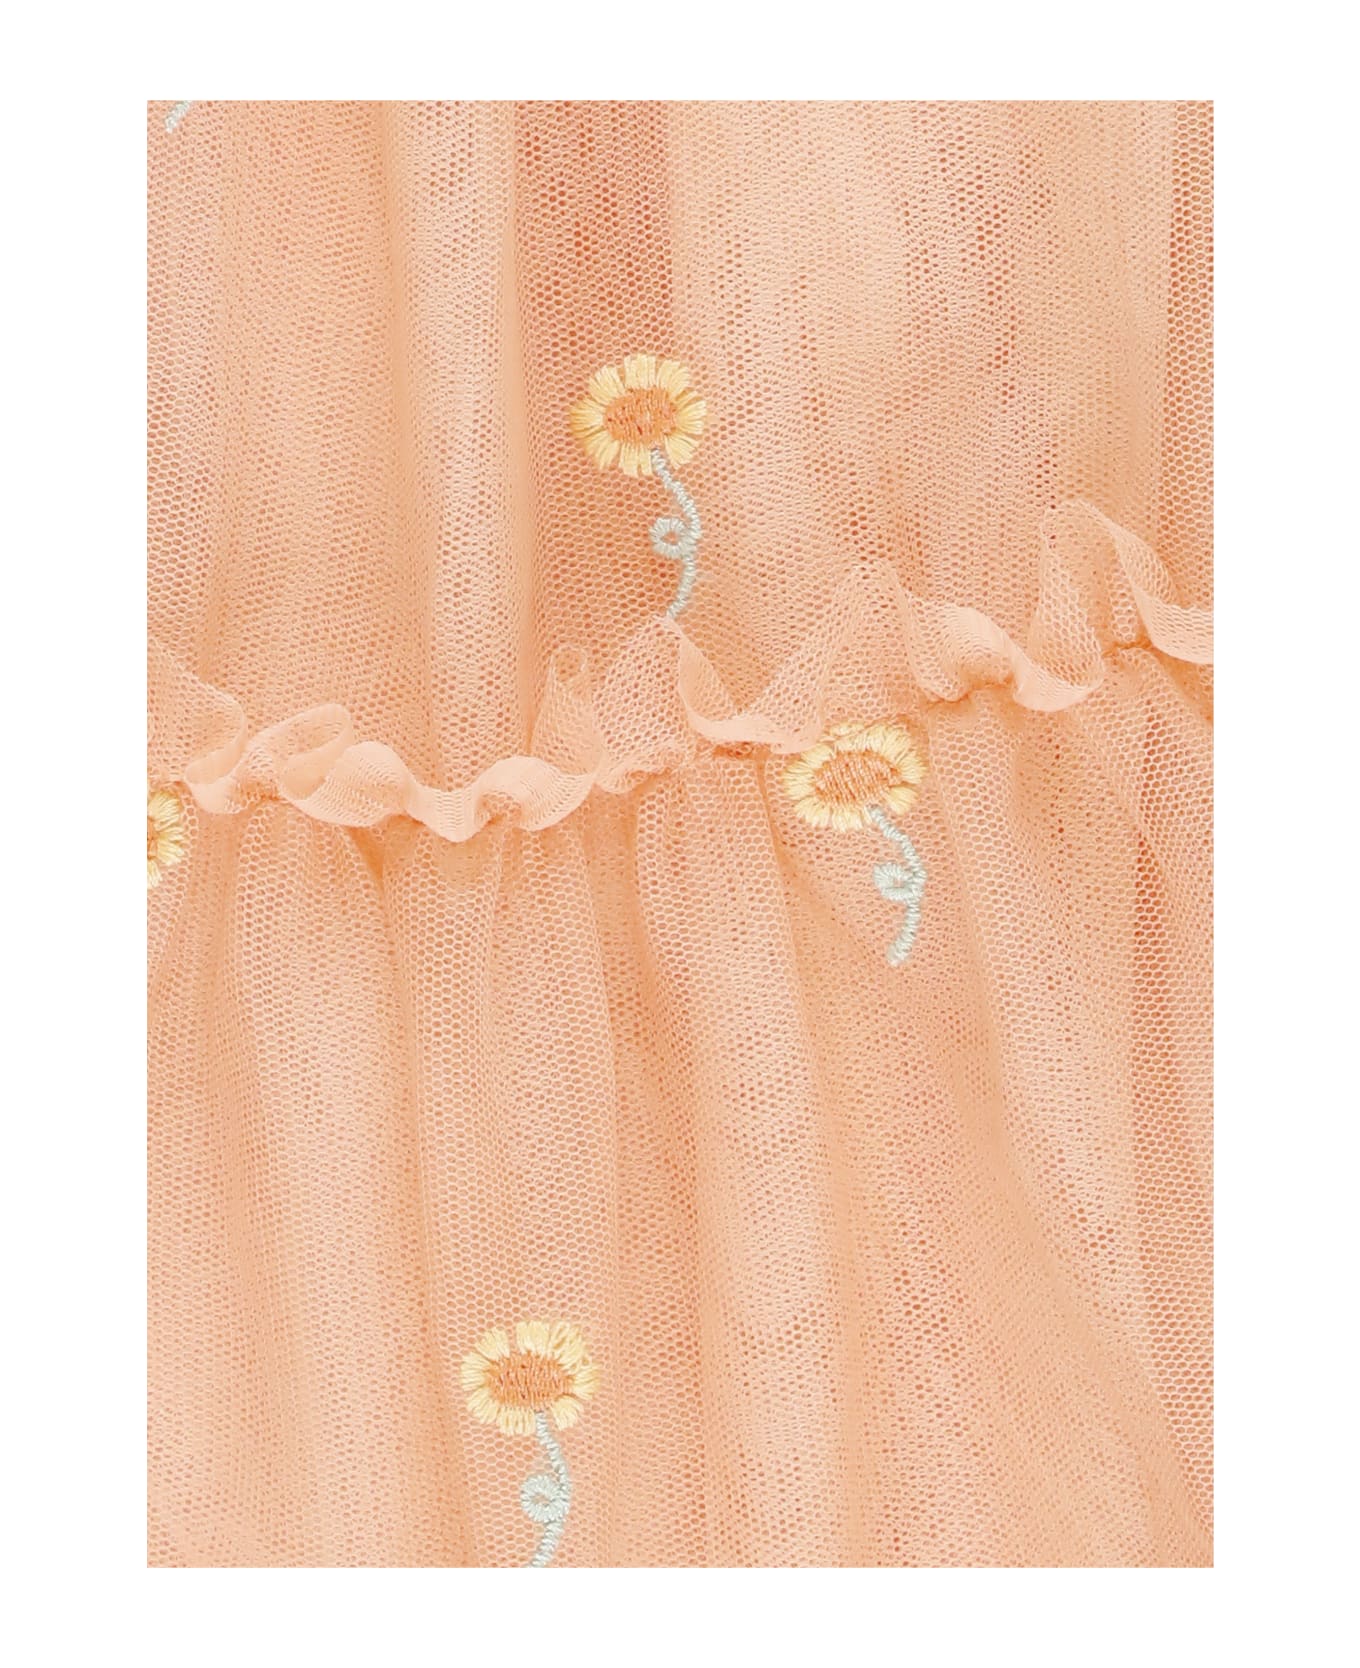 Stella McCartney Sunflower Embroidery Skirt - Pink